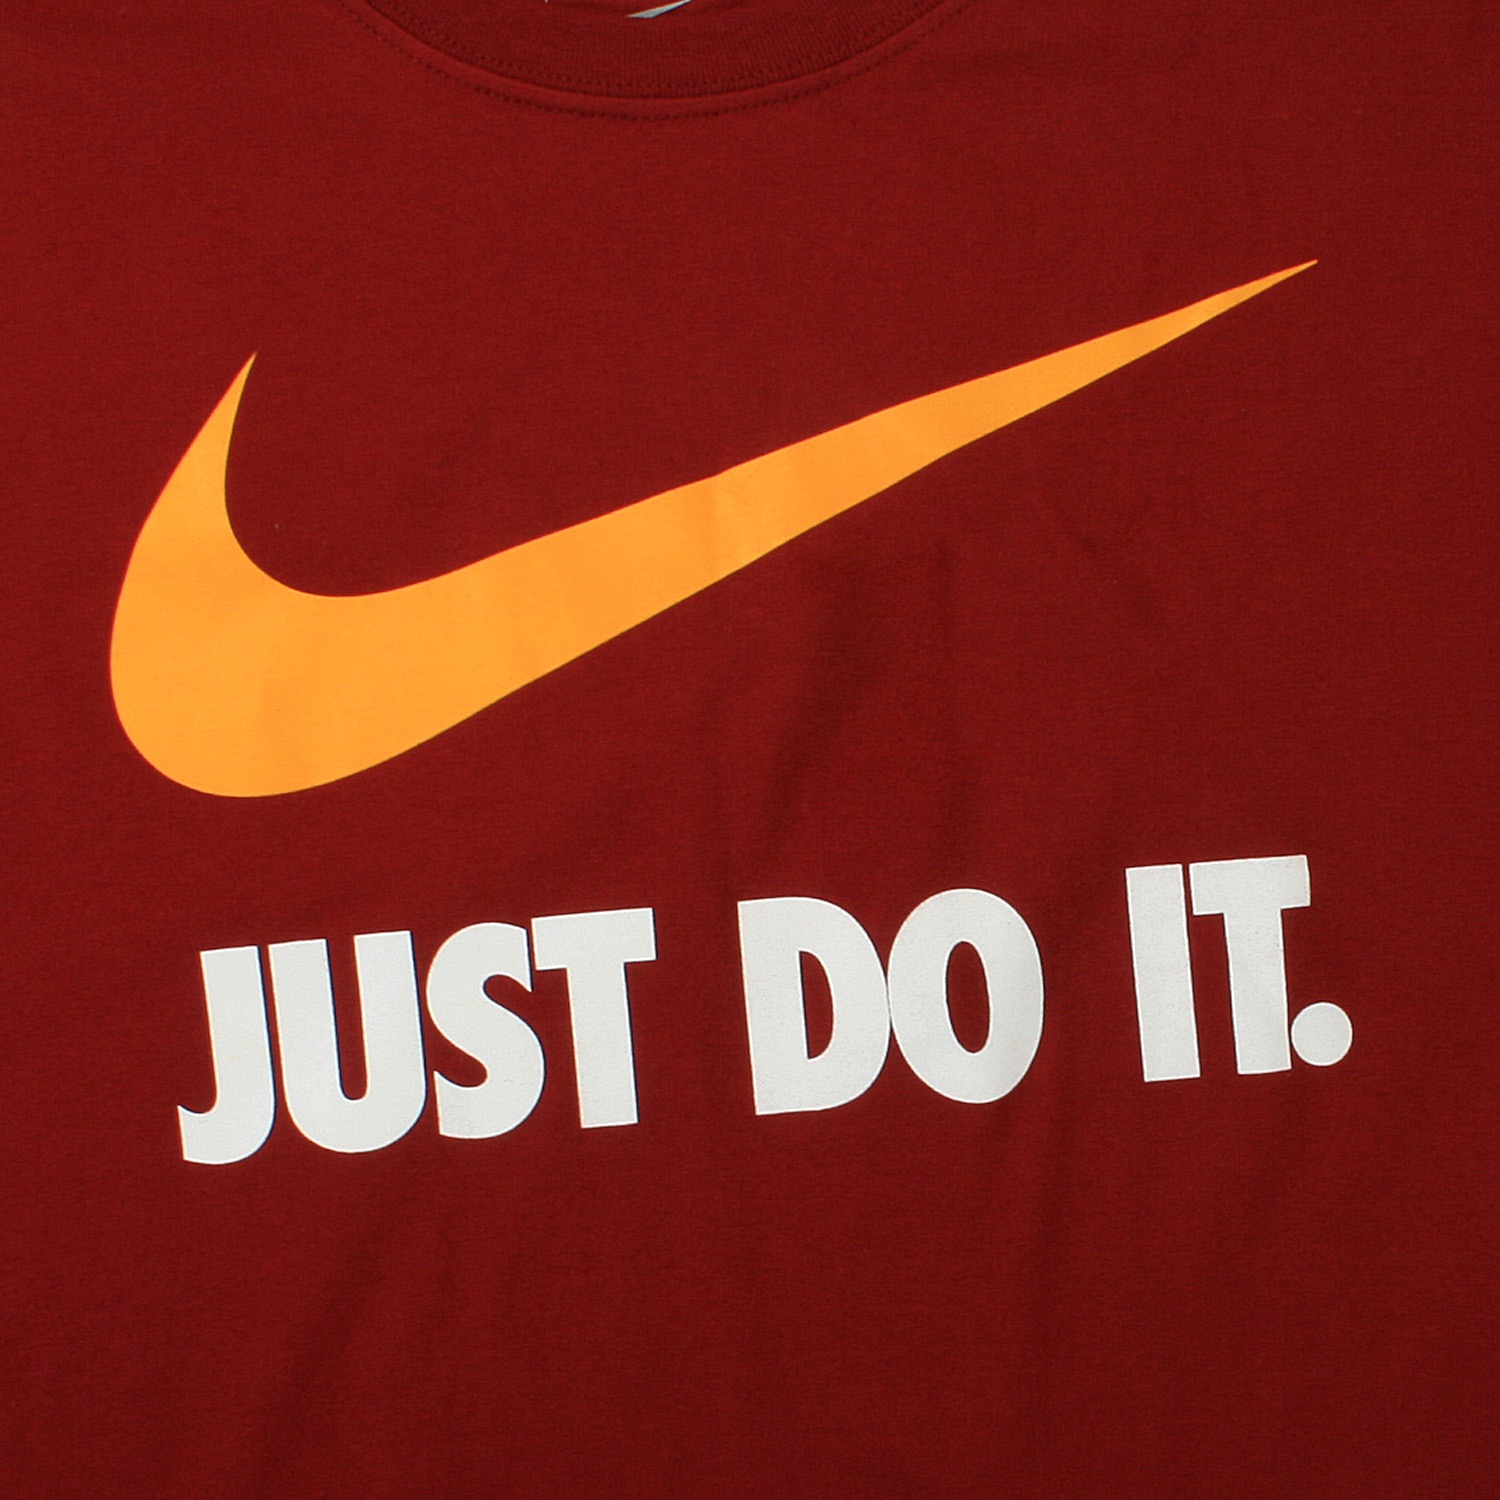 Найк язык. Слоган найк. Nike лозунг. Nike слоган компании. Слоган Nike just do it.